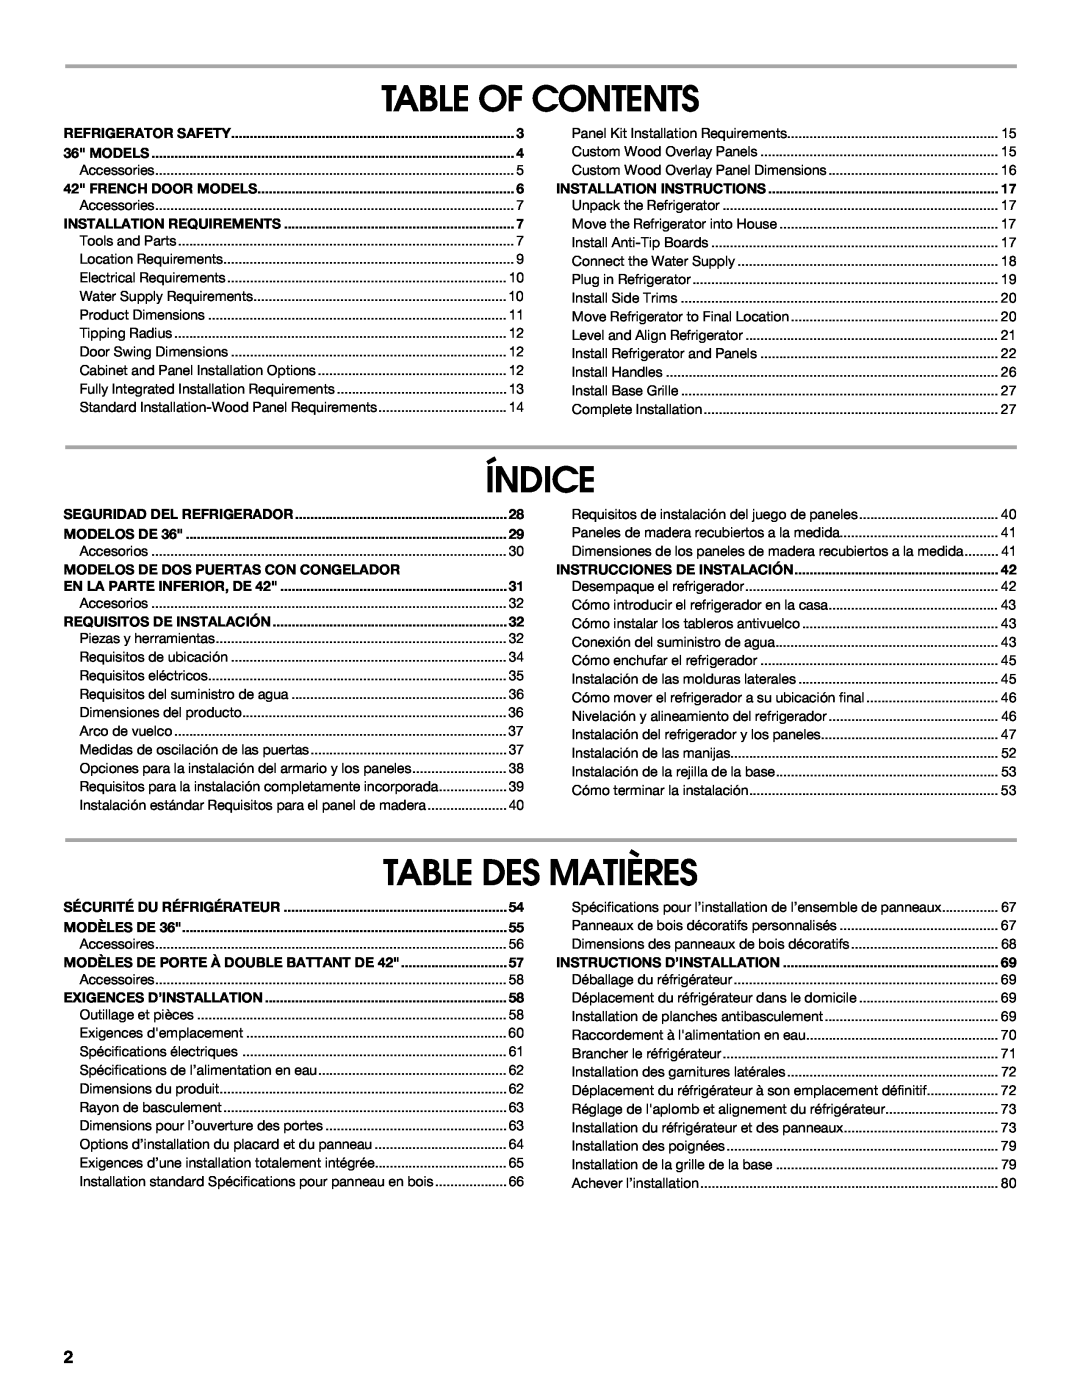 Jenn-Air W10379137A manual Table Of Contents, Índice, Table Des Matières 